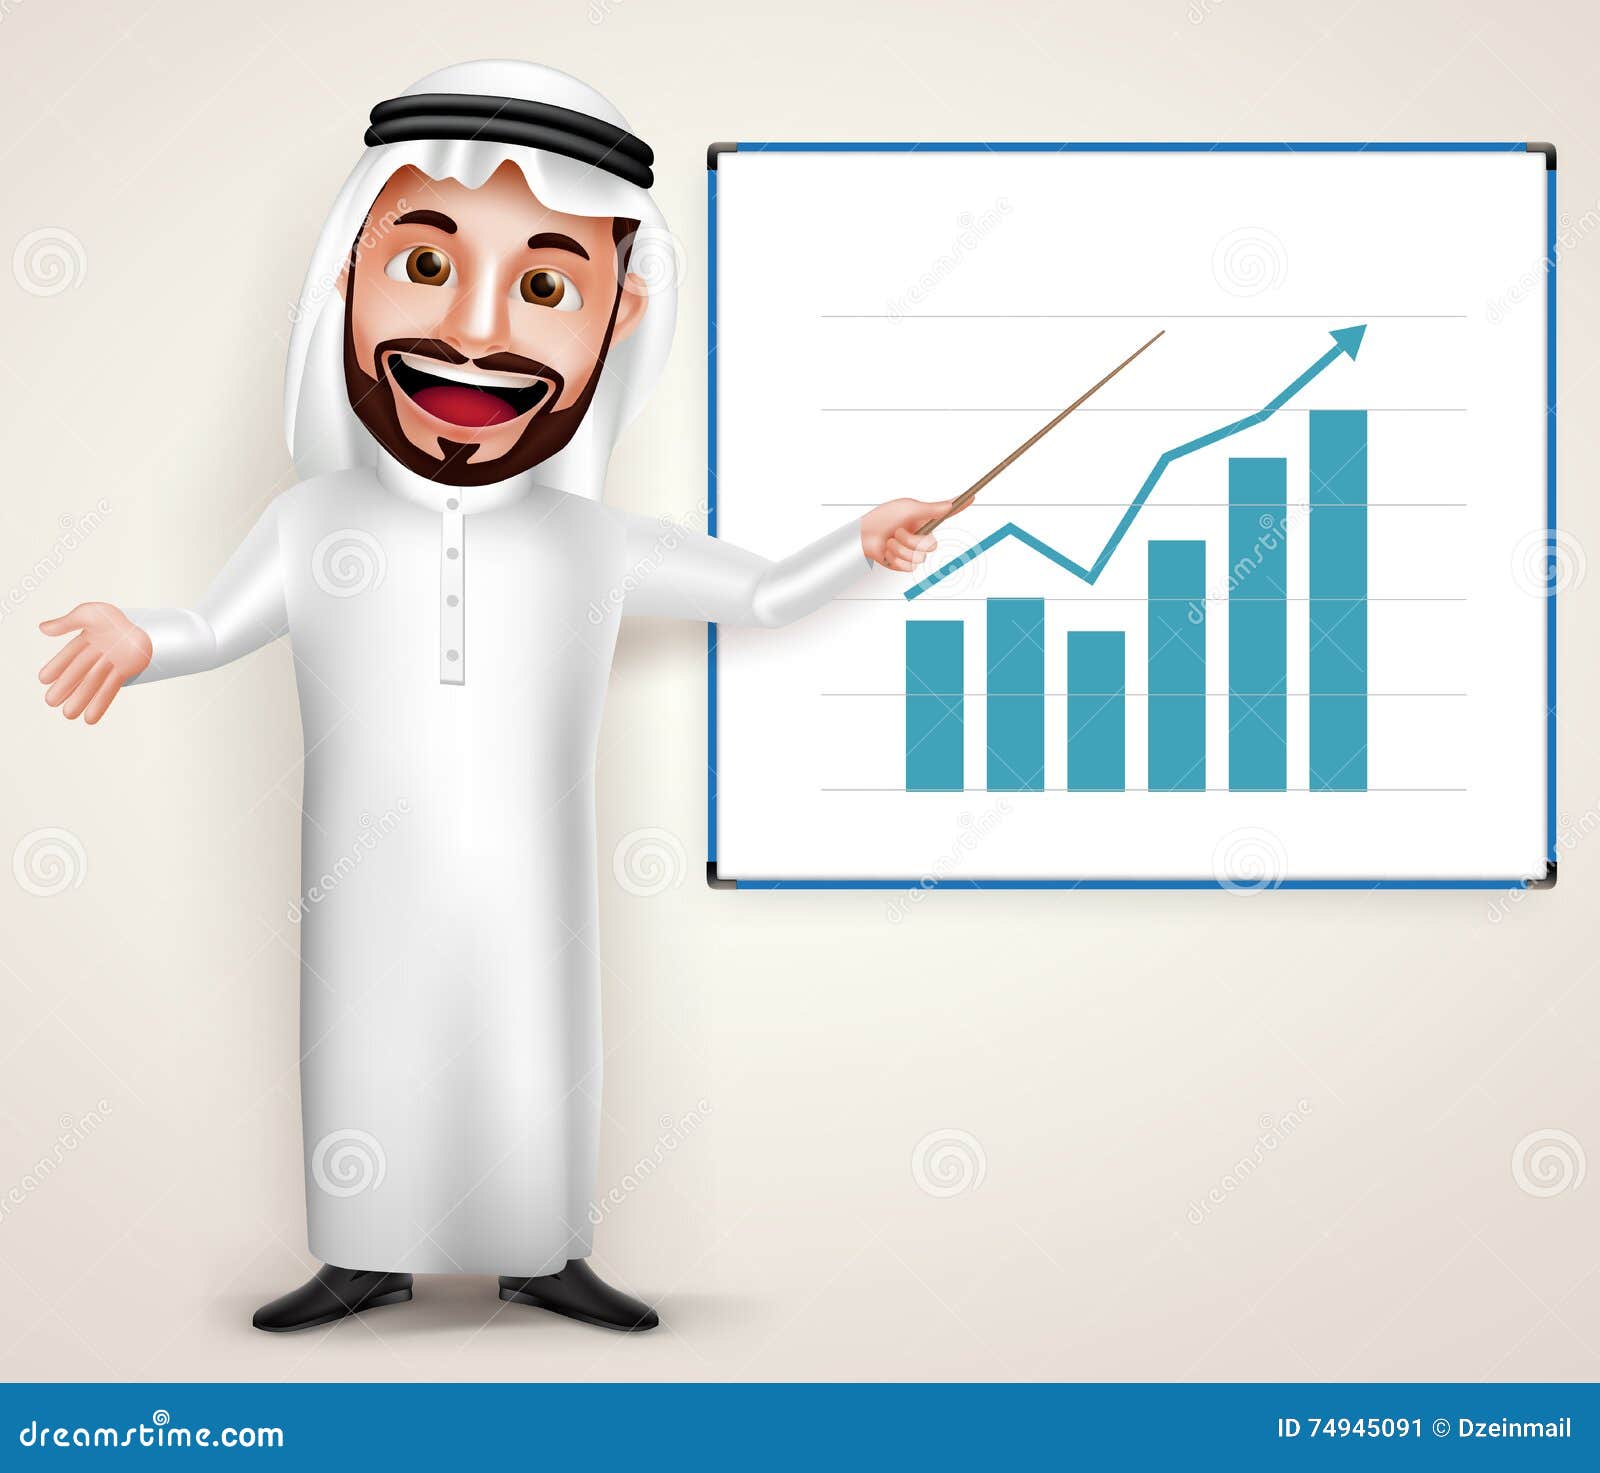 saudi arab man  character wearing thobe teaching chart graph